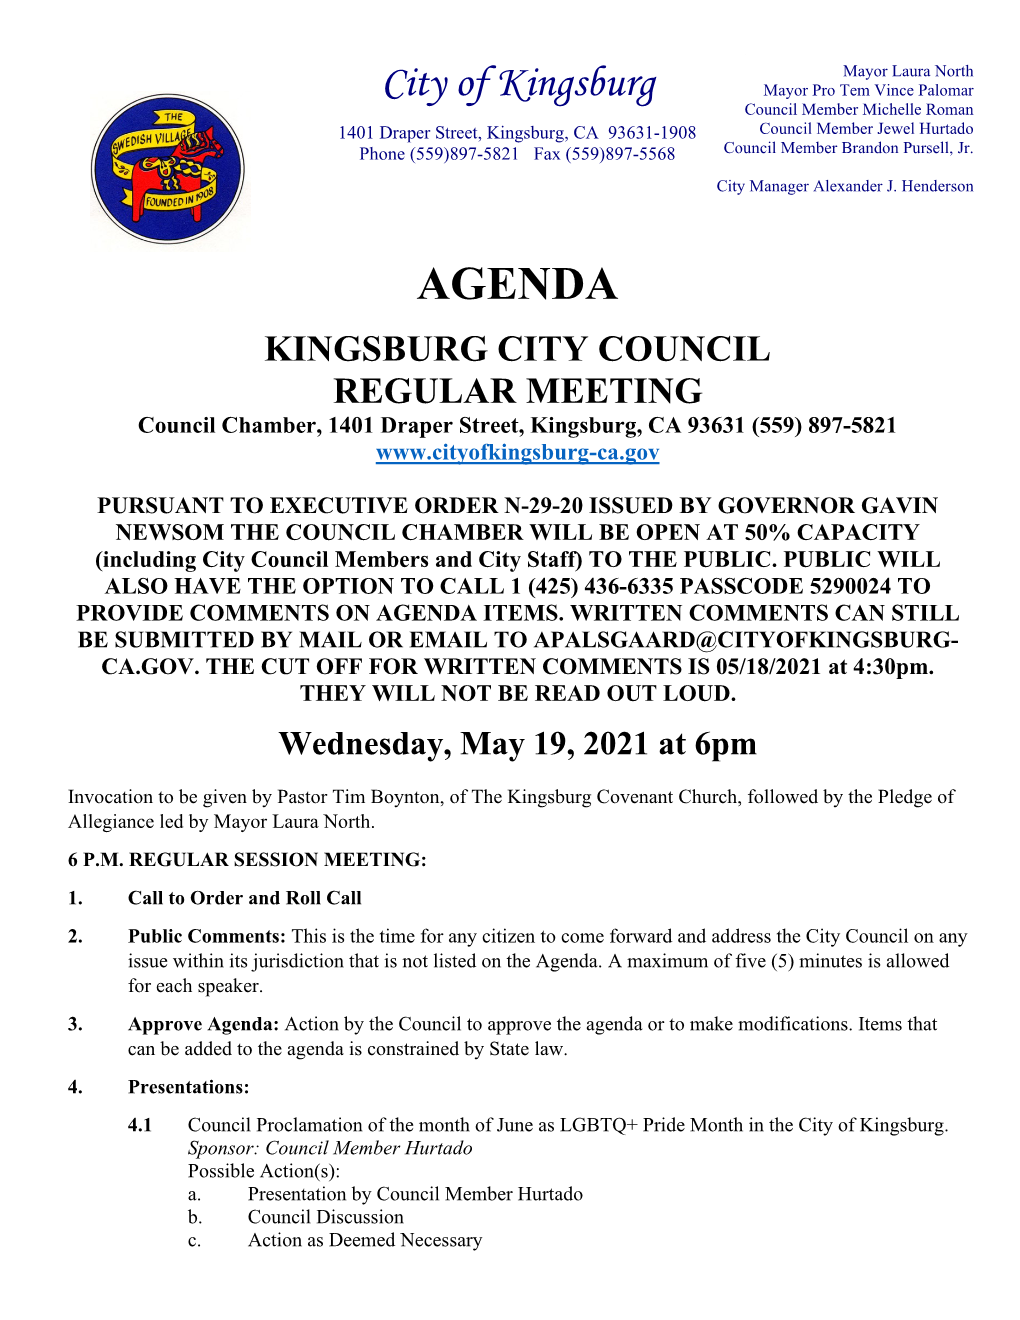 City Council Regular Meeting Agenda